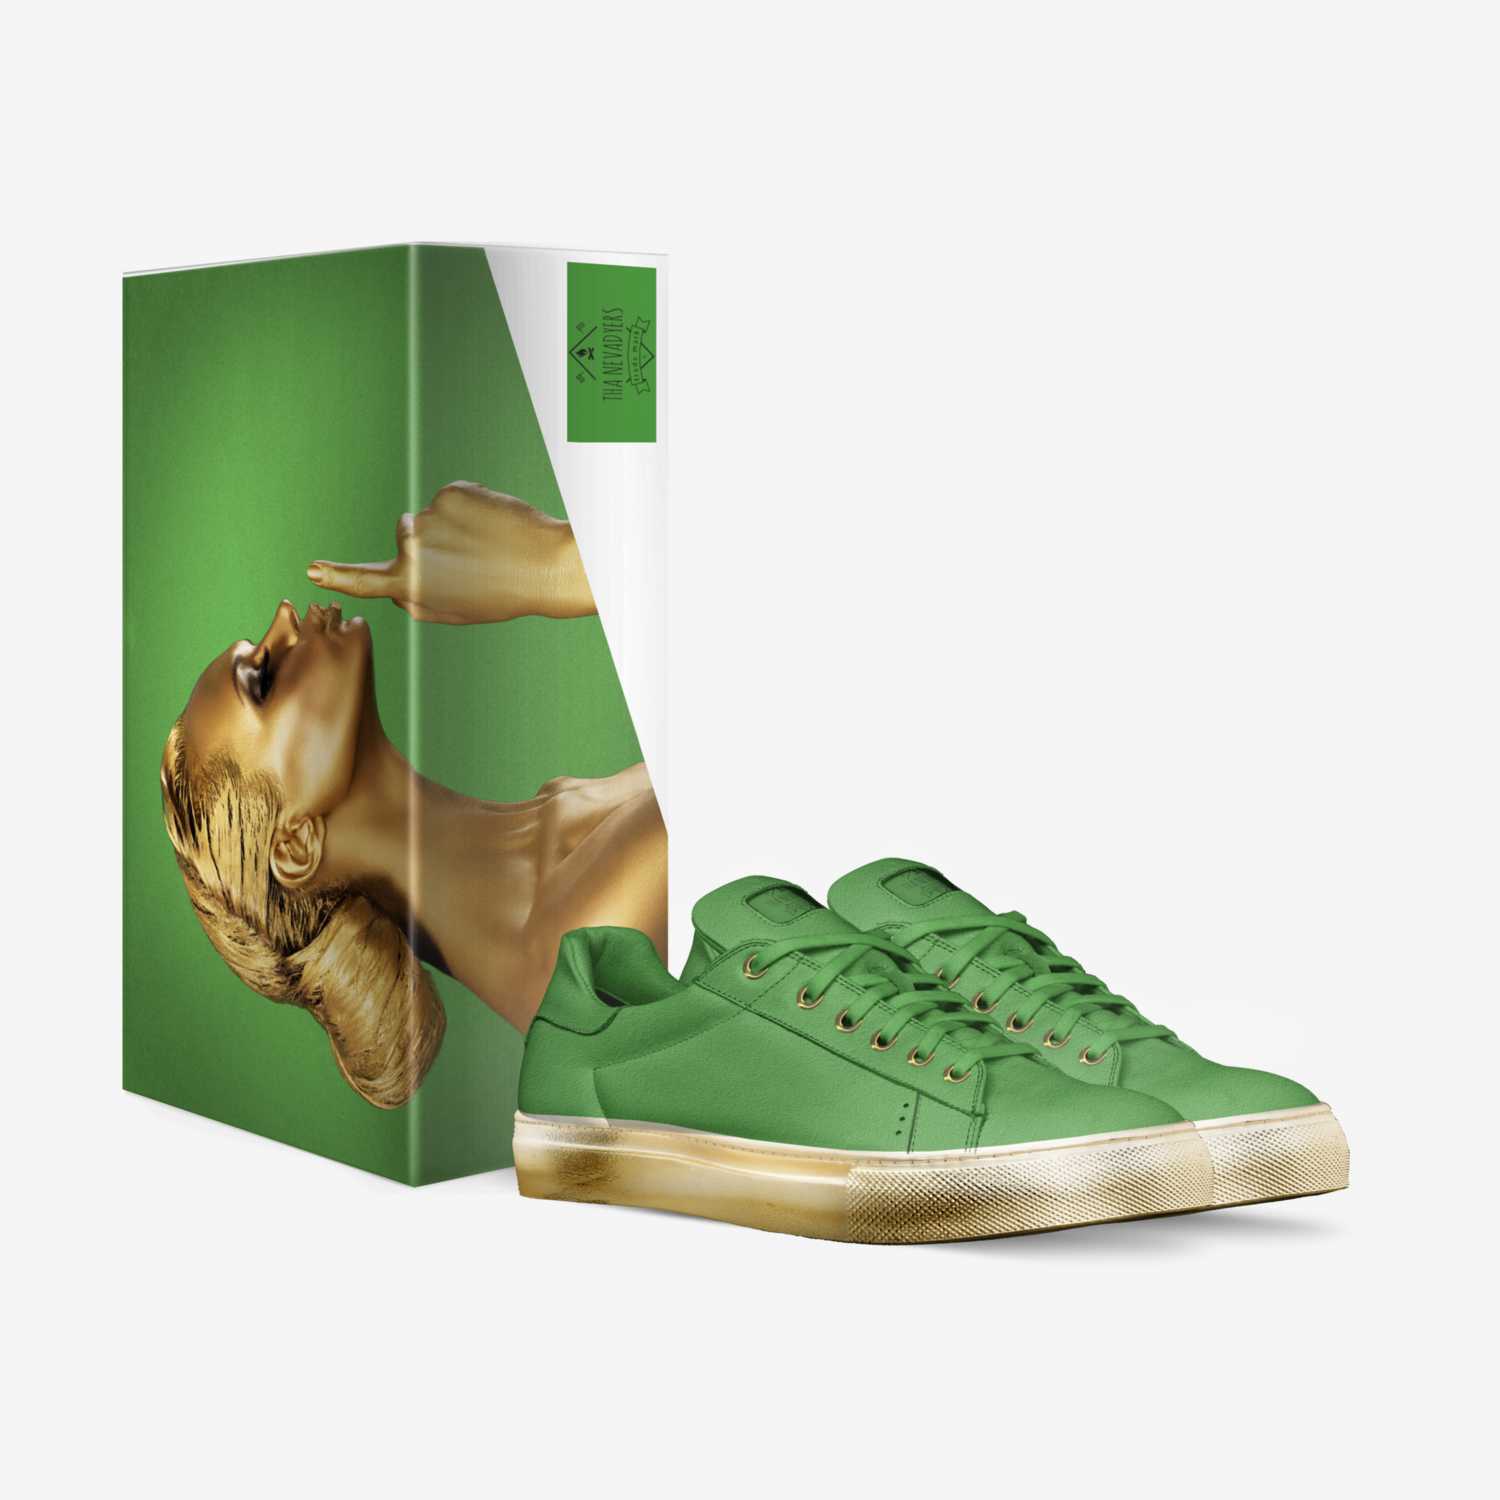 Gaddafi Green custom made in Italy shoes by Galatikz Dixon | Box view